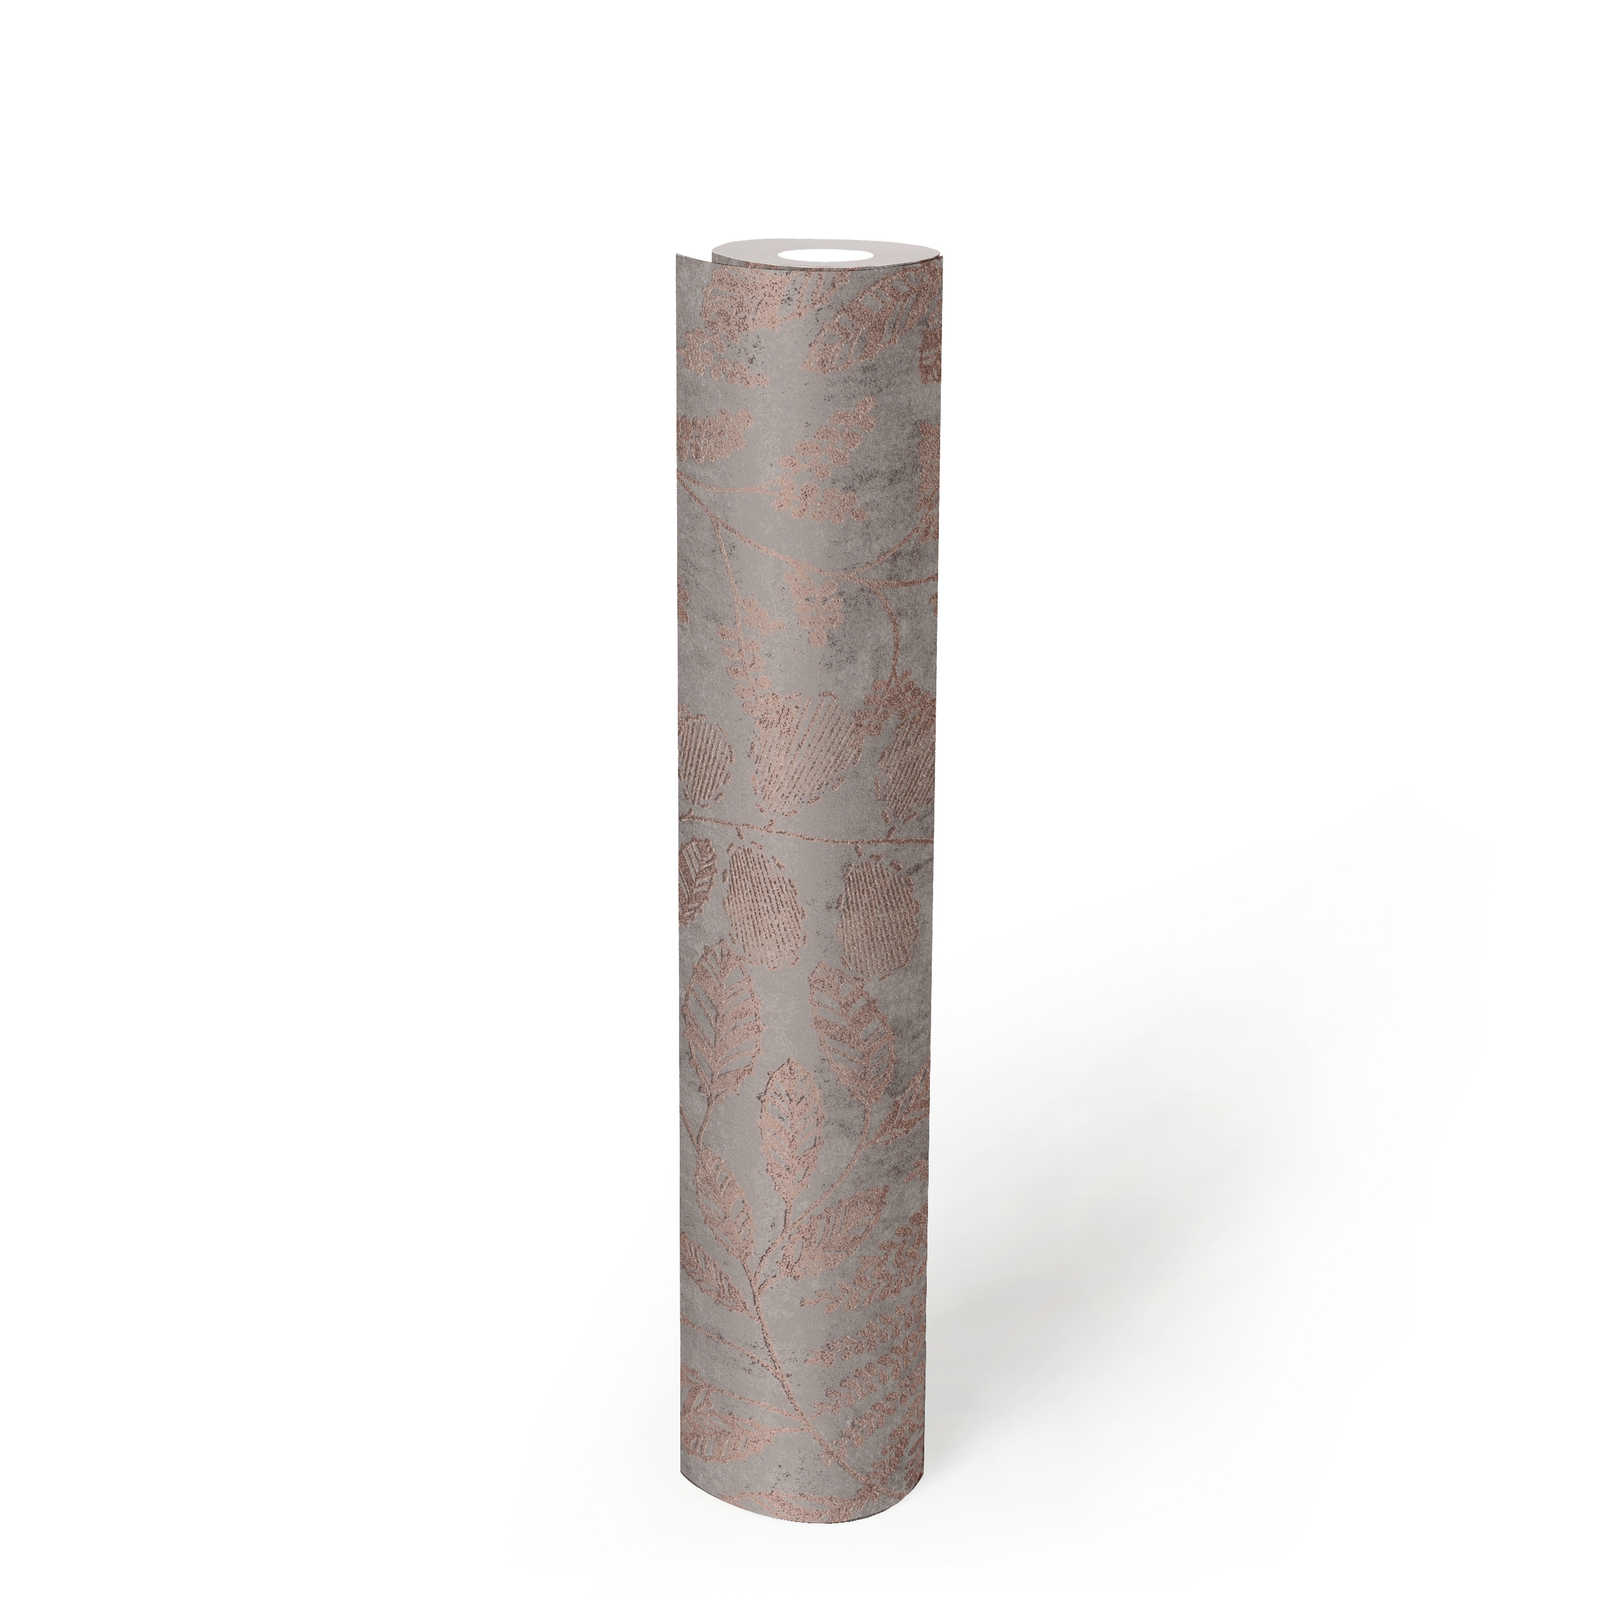             Metallic wallpaper leaf pattern in skandi style - grey, metallic
        